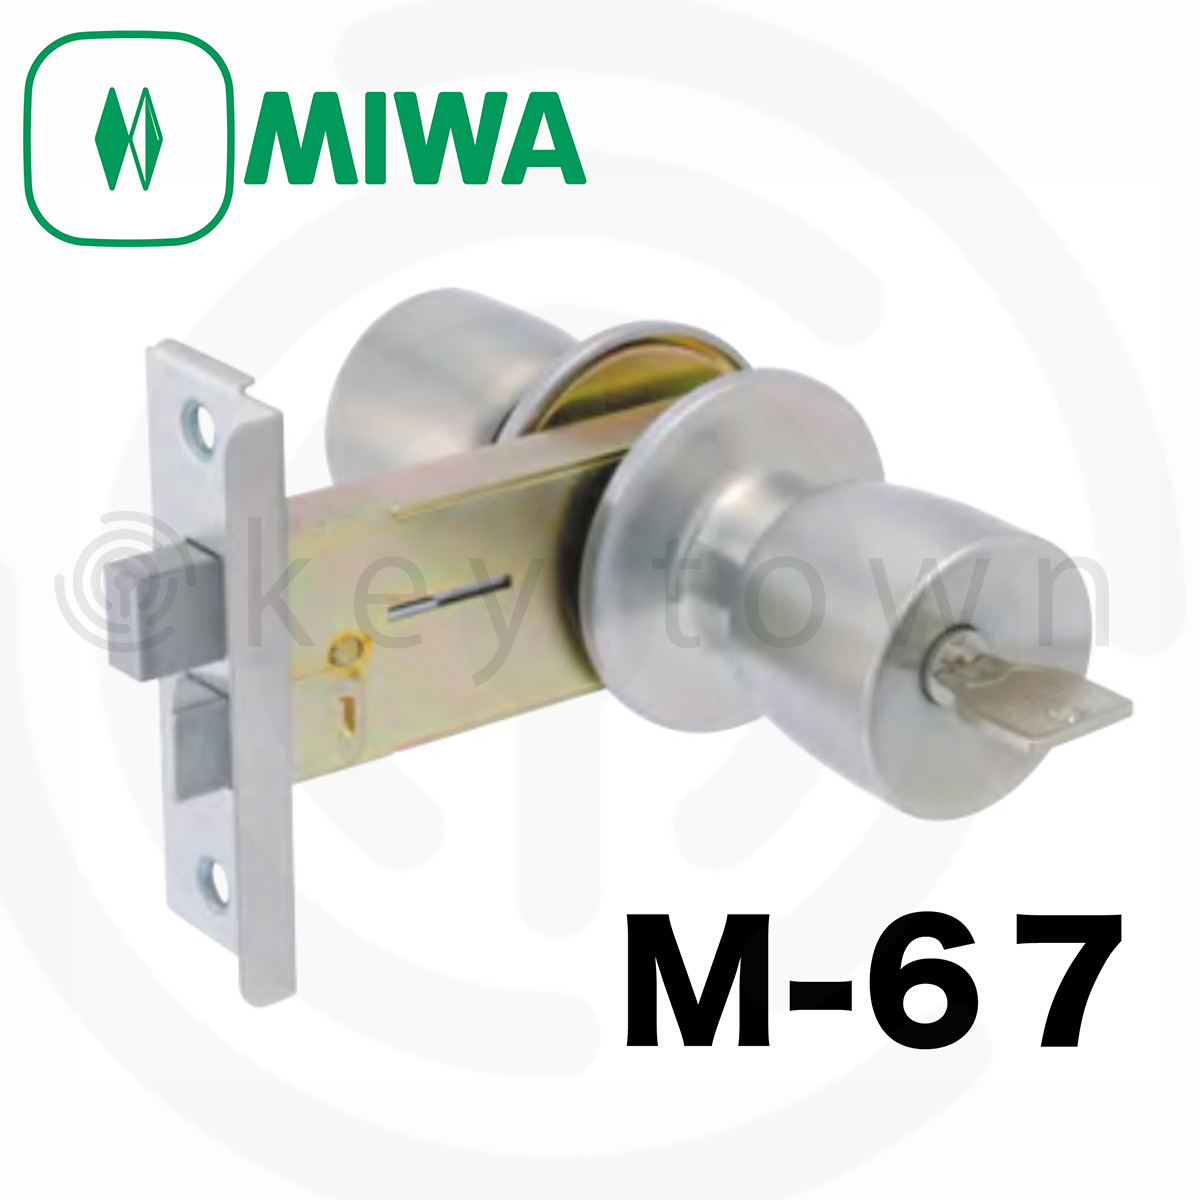 MIWA 【美和ロック】 特殊錠 玄関錠 [MIWA-M-67] Kシリーズ[M-67]｜鍵 